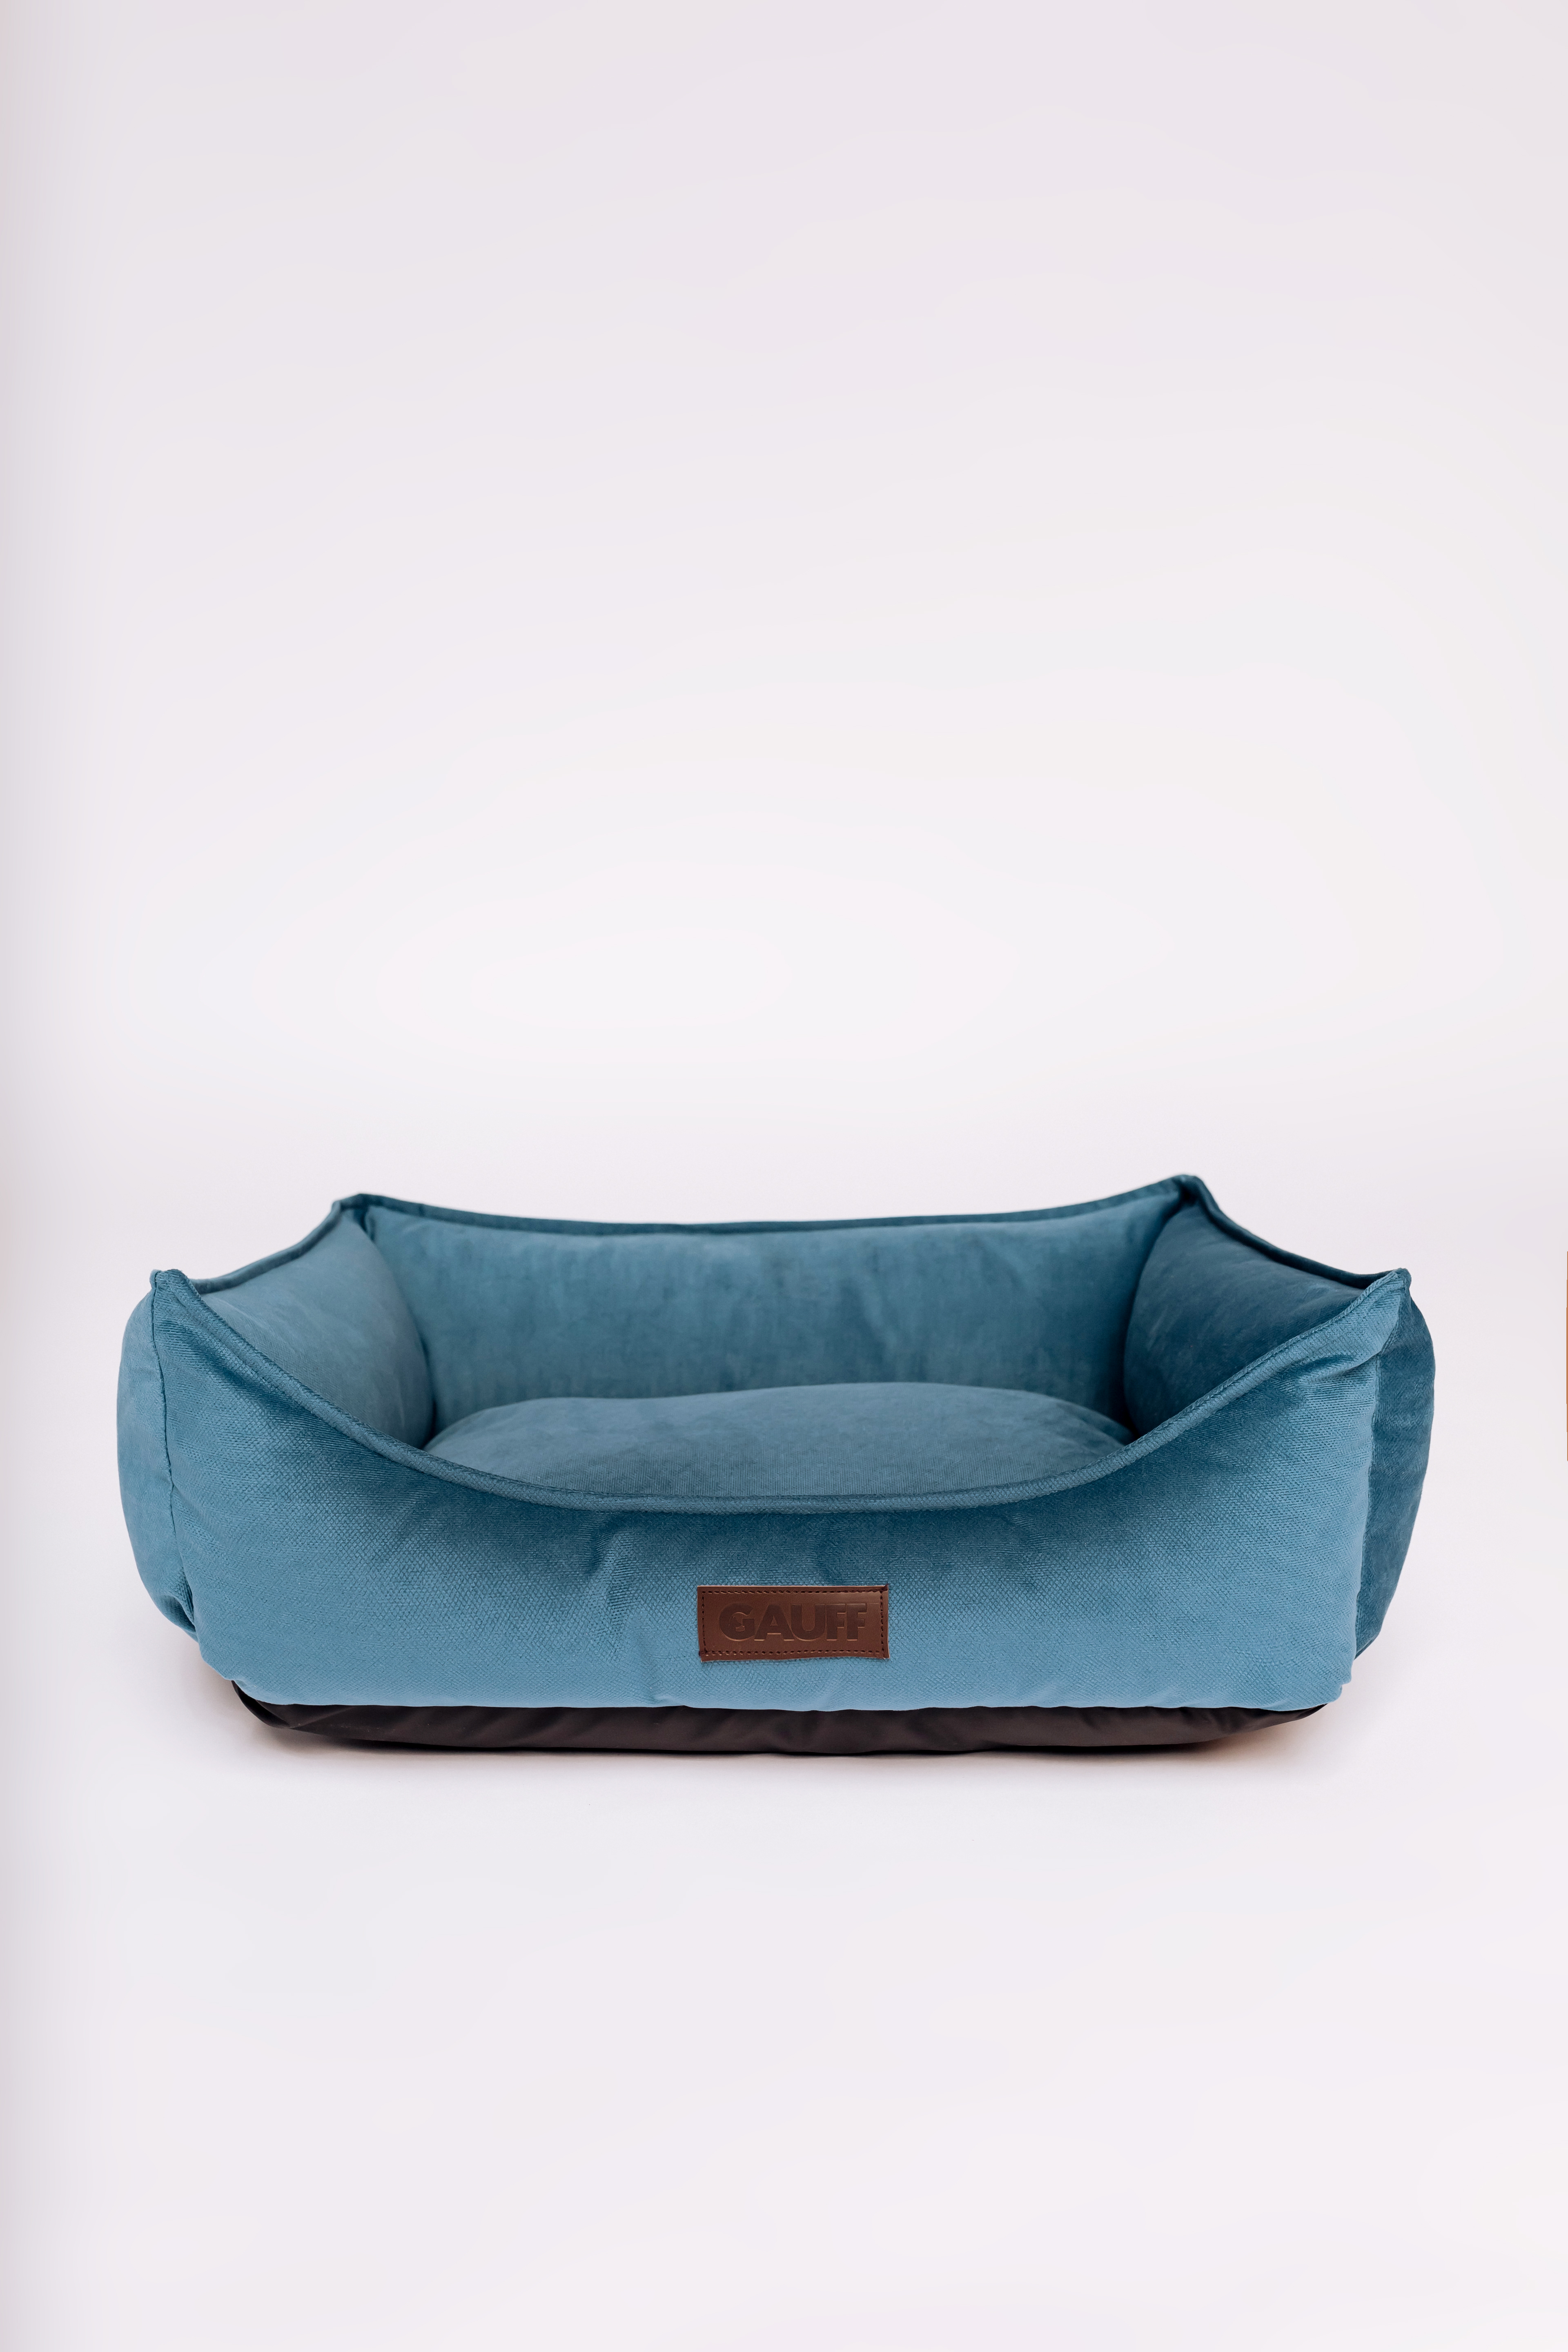 лежак для животных gauff "эйс вентура" синий, размер 53х40х19